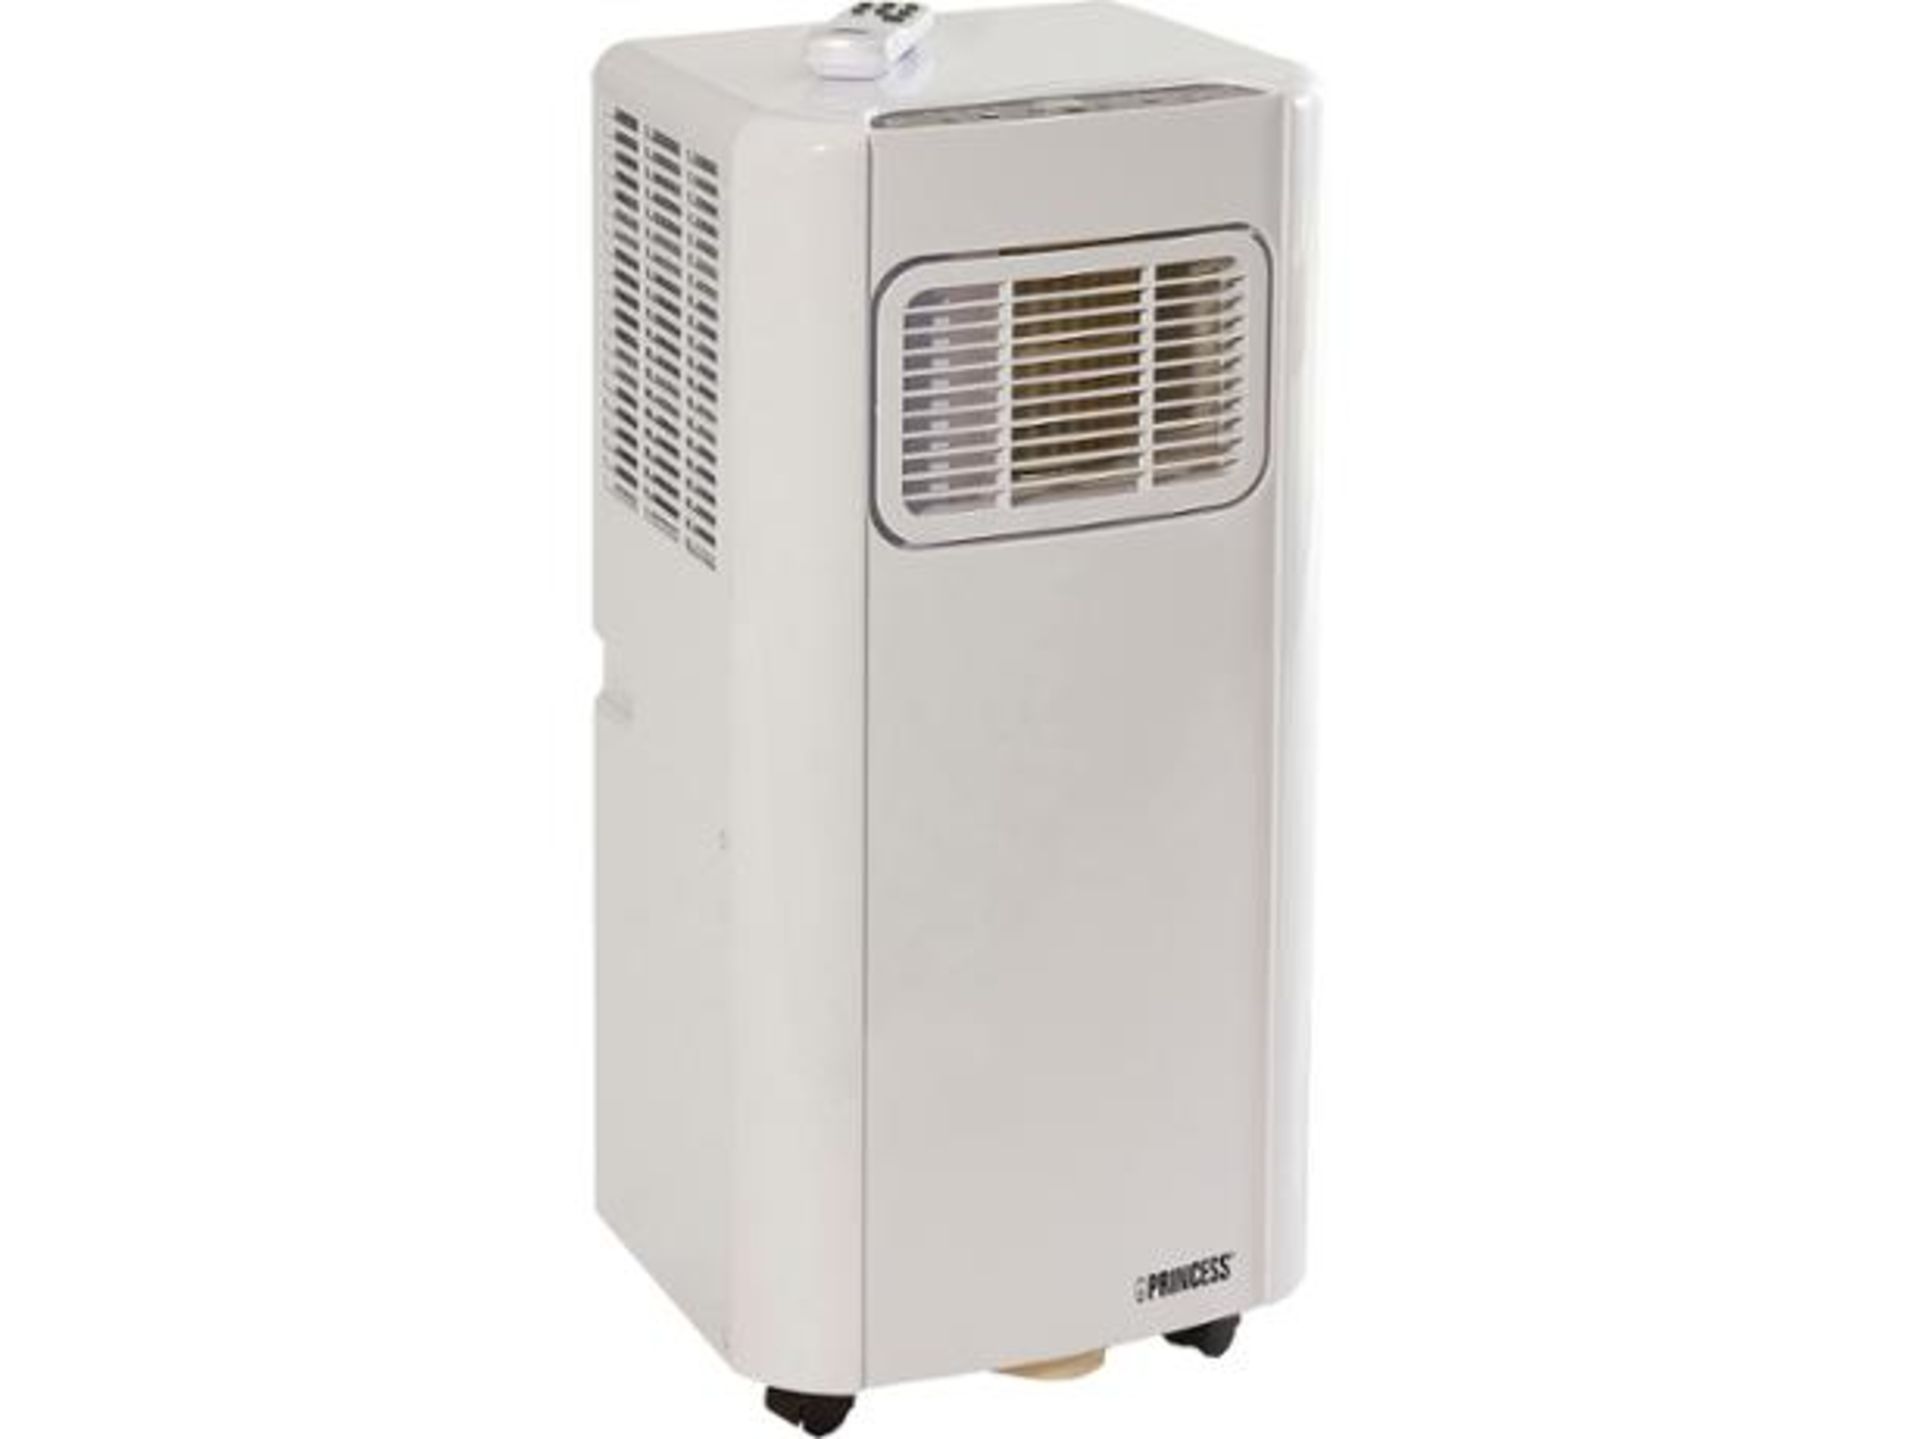 1 x PRINCESS WHITE AIR CONDITIONER 9000 BTU. RRP £399.99 EACH. 1000 Watt mobile air conditioner - Image 2 of 2